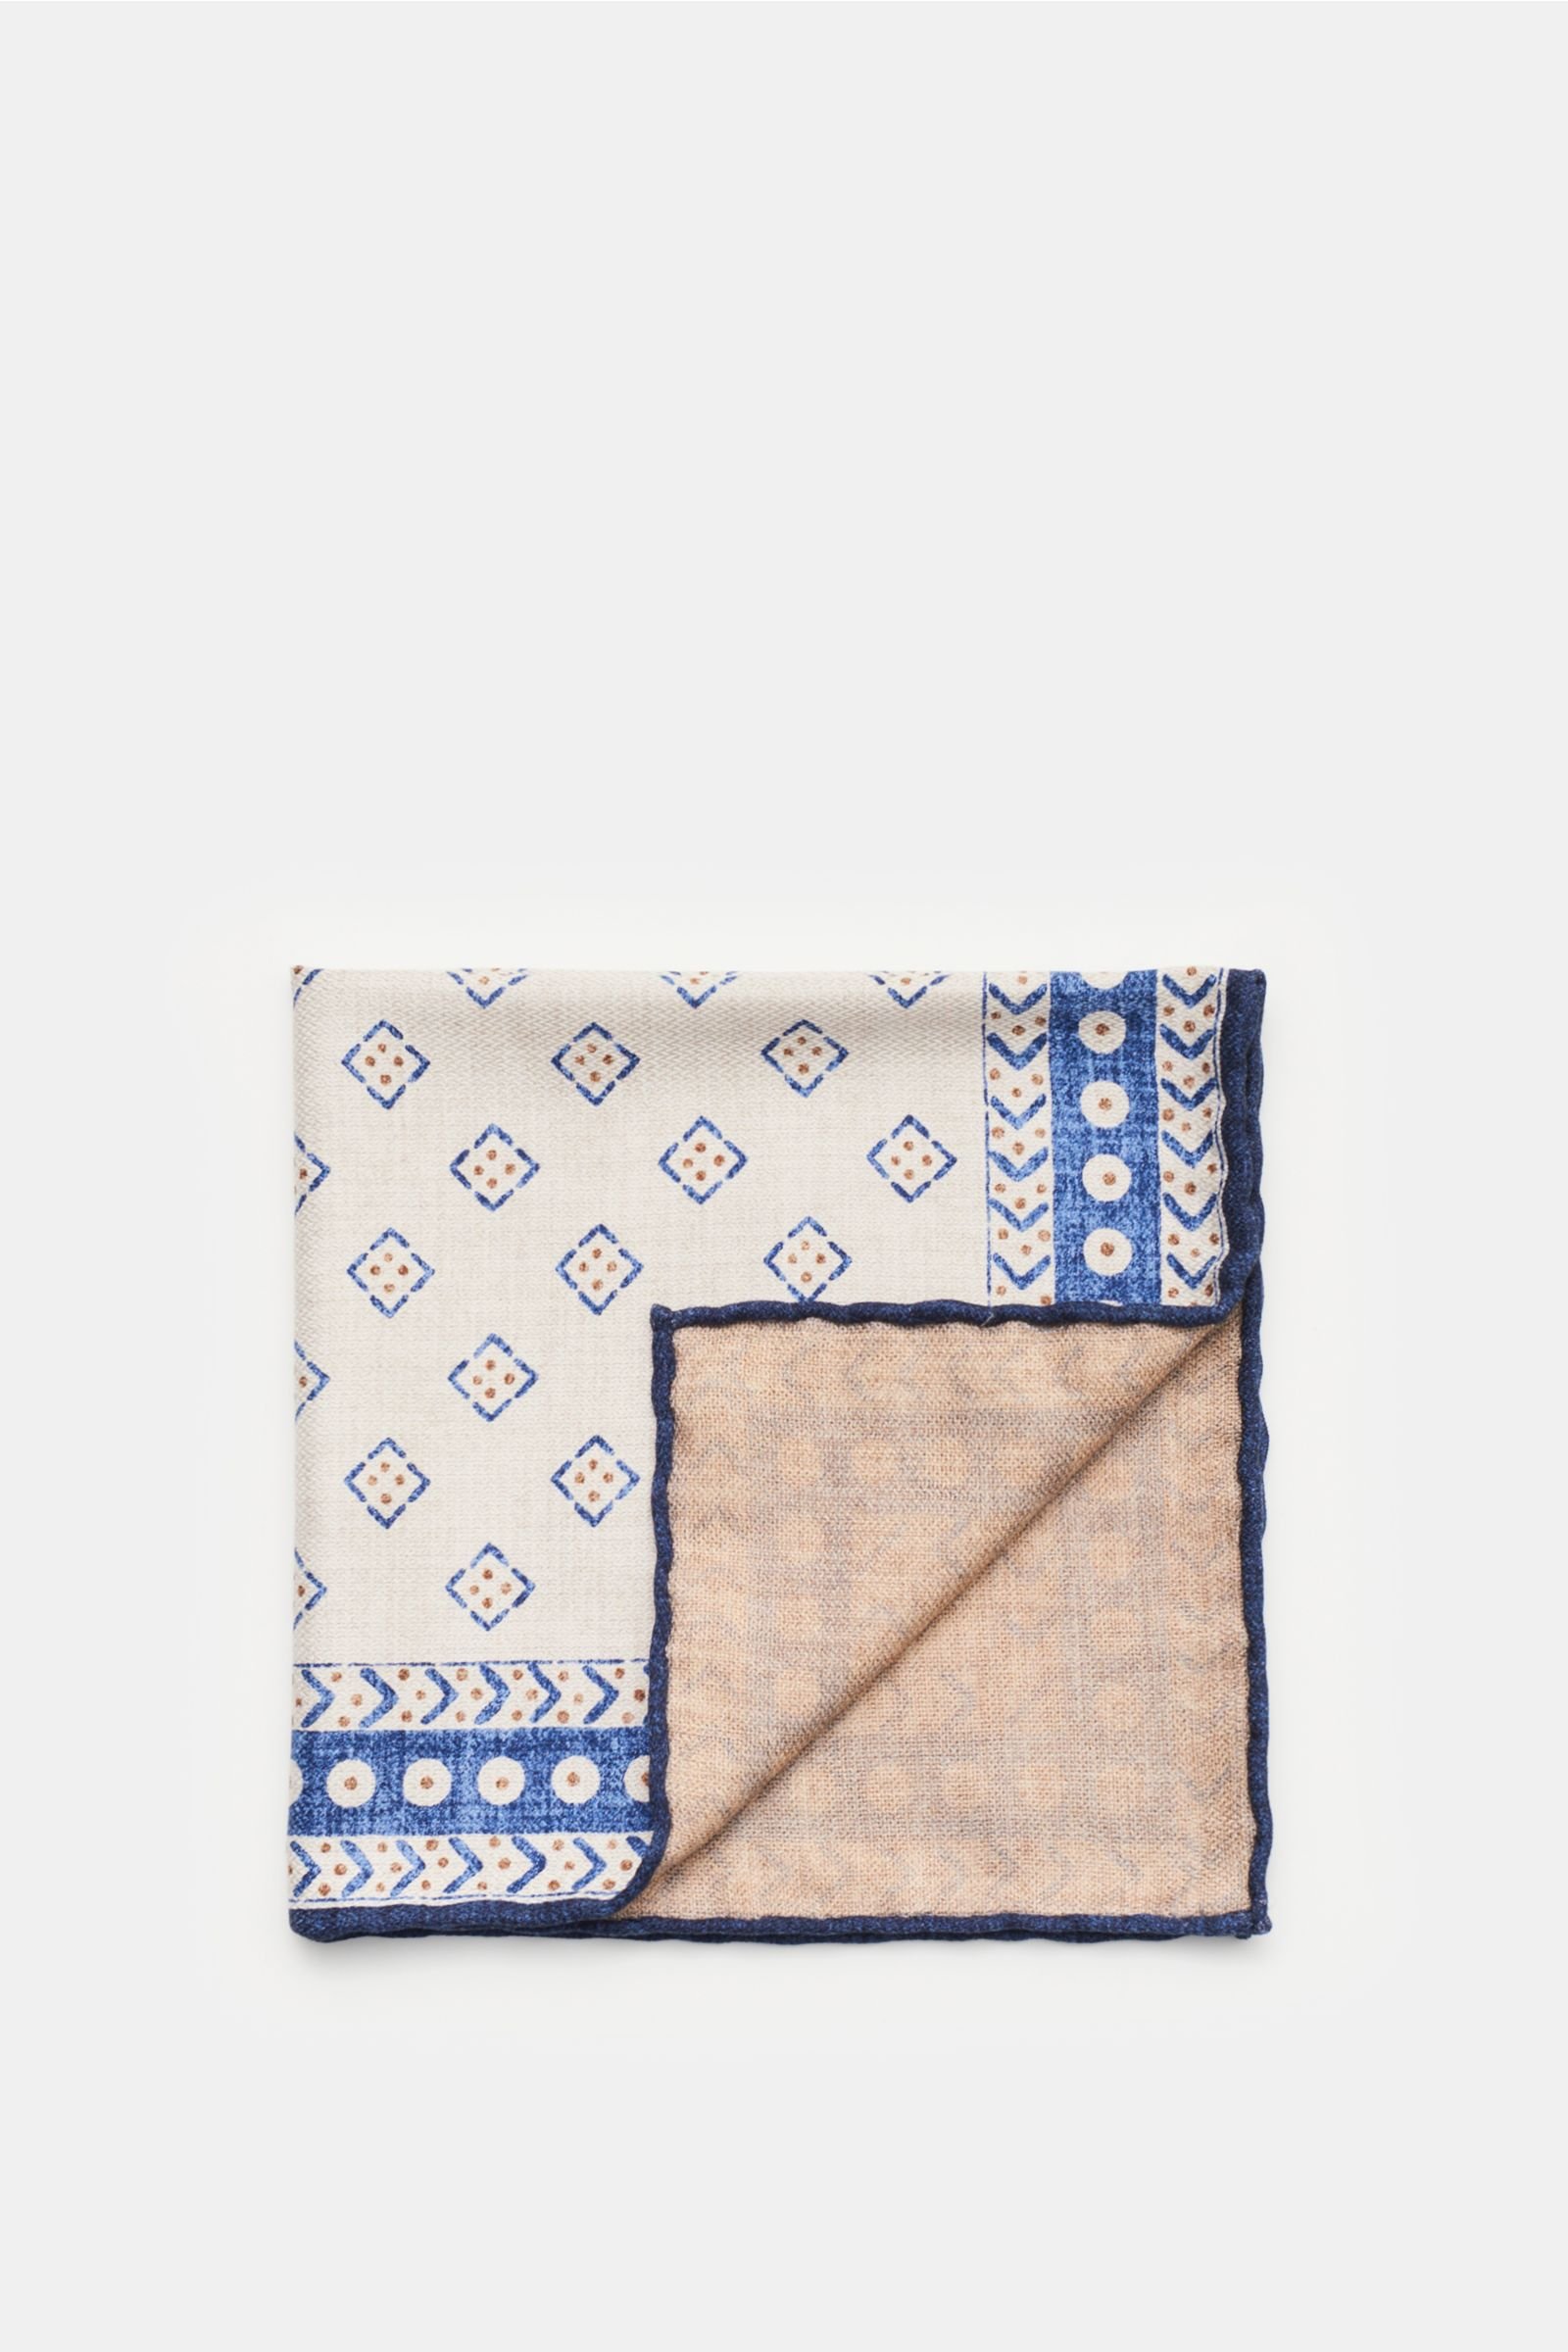 Pocket square cream/grey-blue patterned